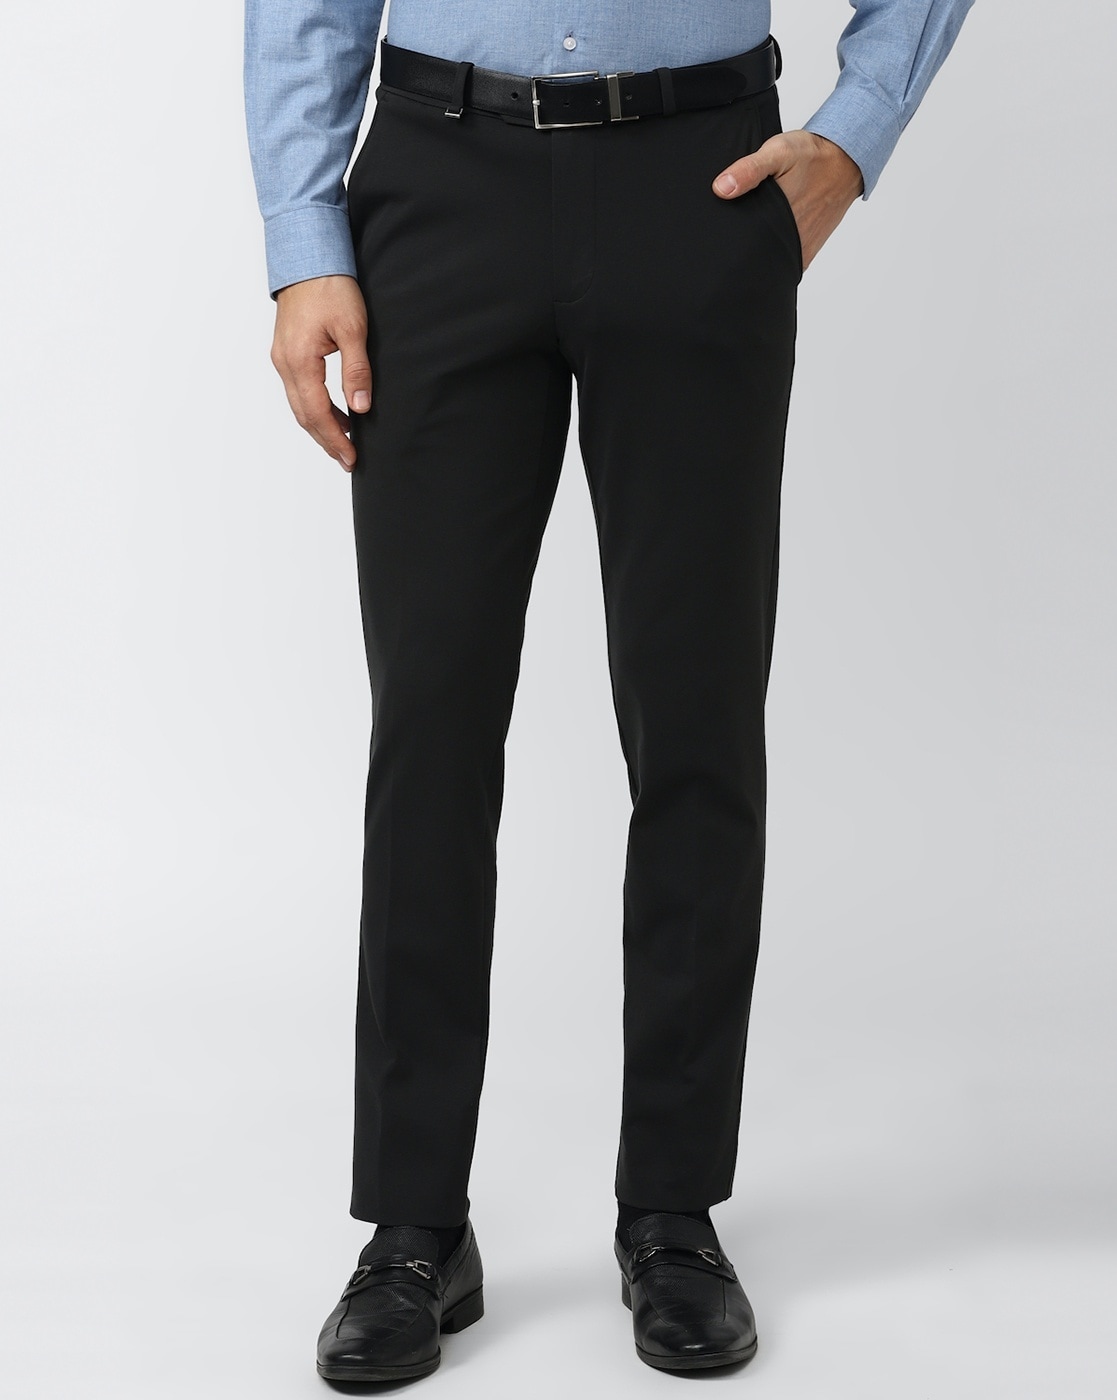 Buy VAN HEUSEN Mens 4 Pocket Solid Formal Trousers Neo Classic  Shoppers  Stop